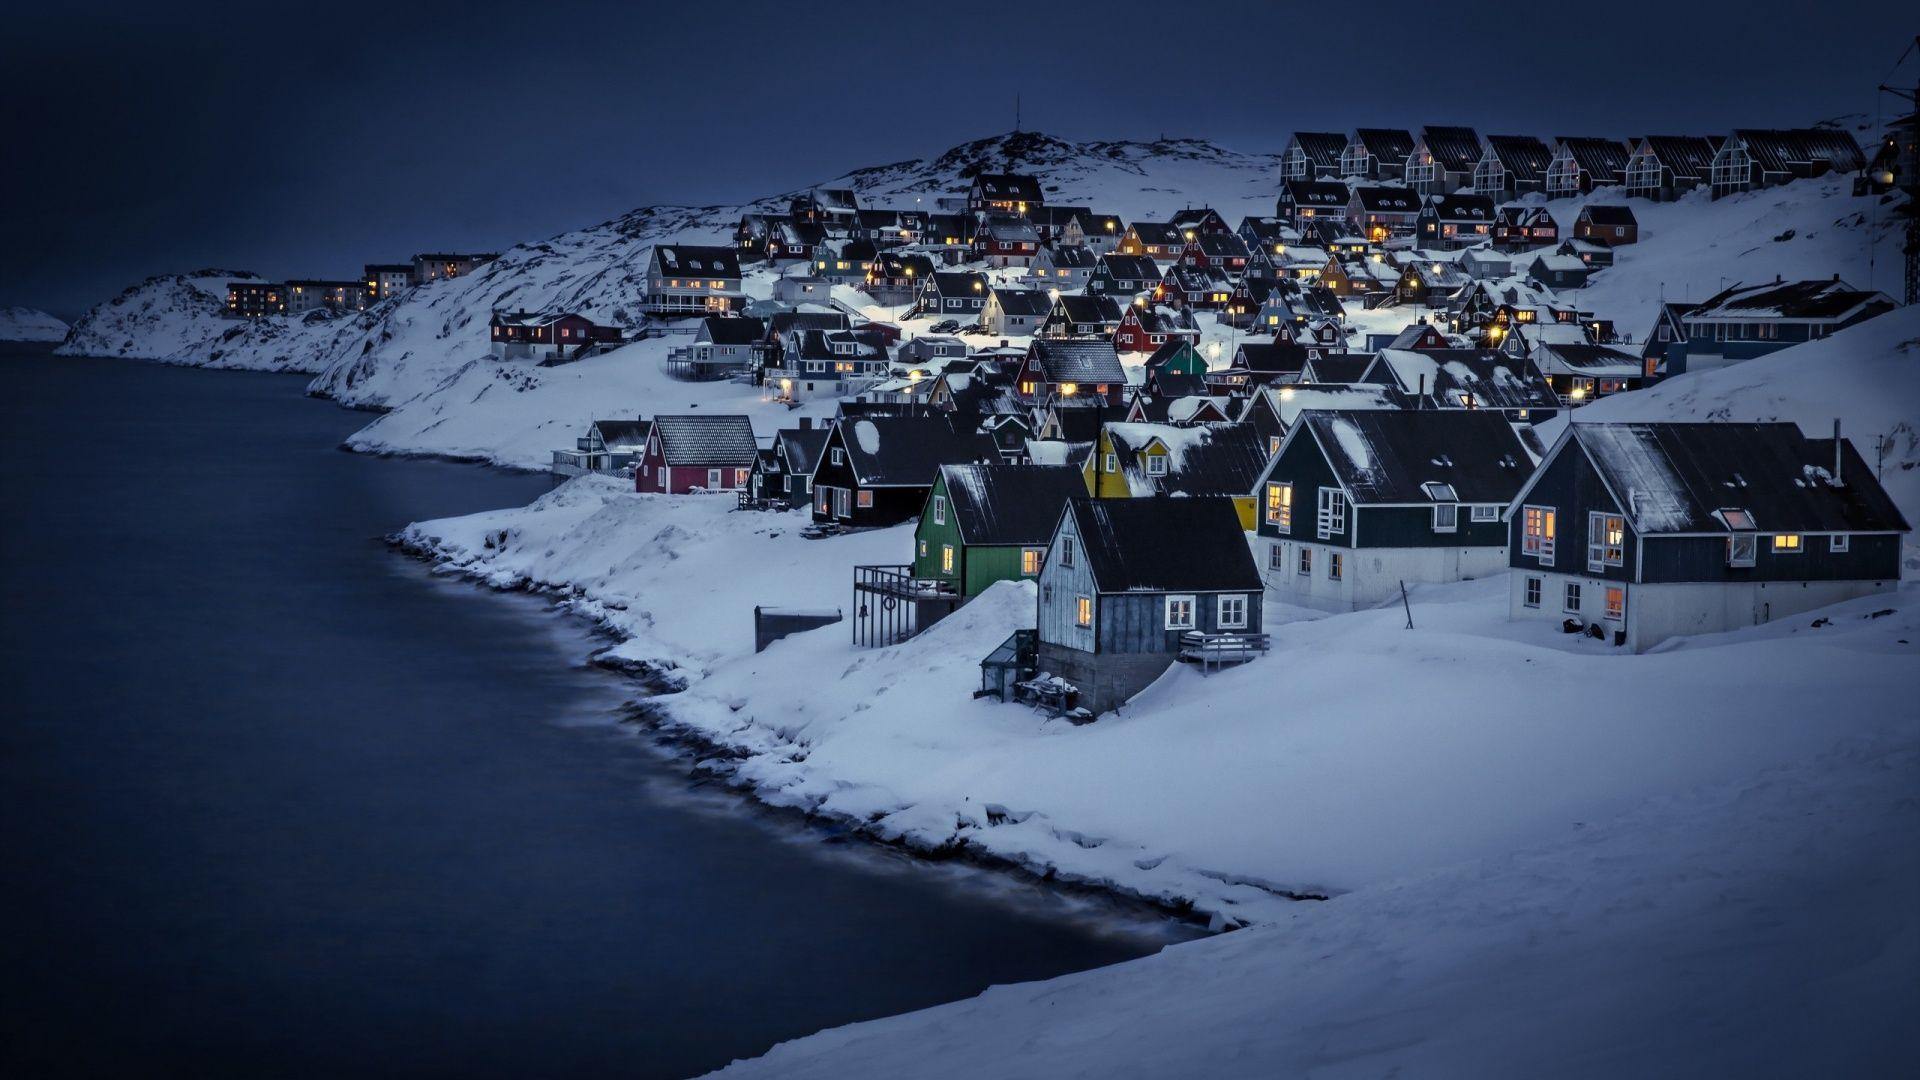 Hans Egede Hotel Nuuk Greenland Wallpaper